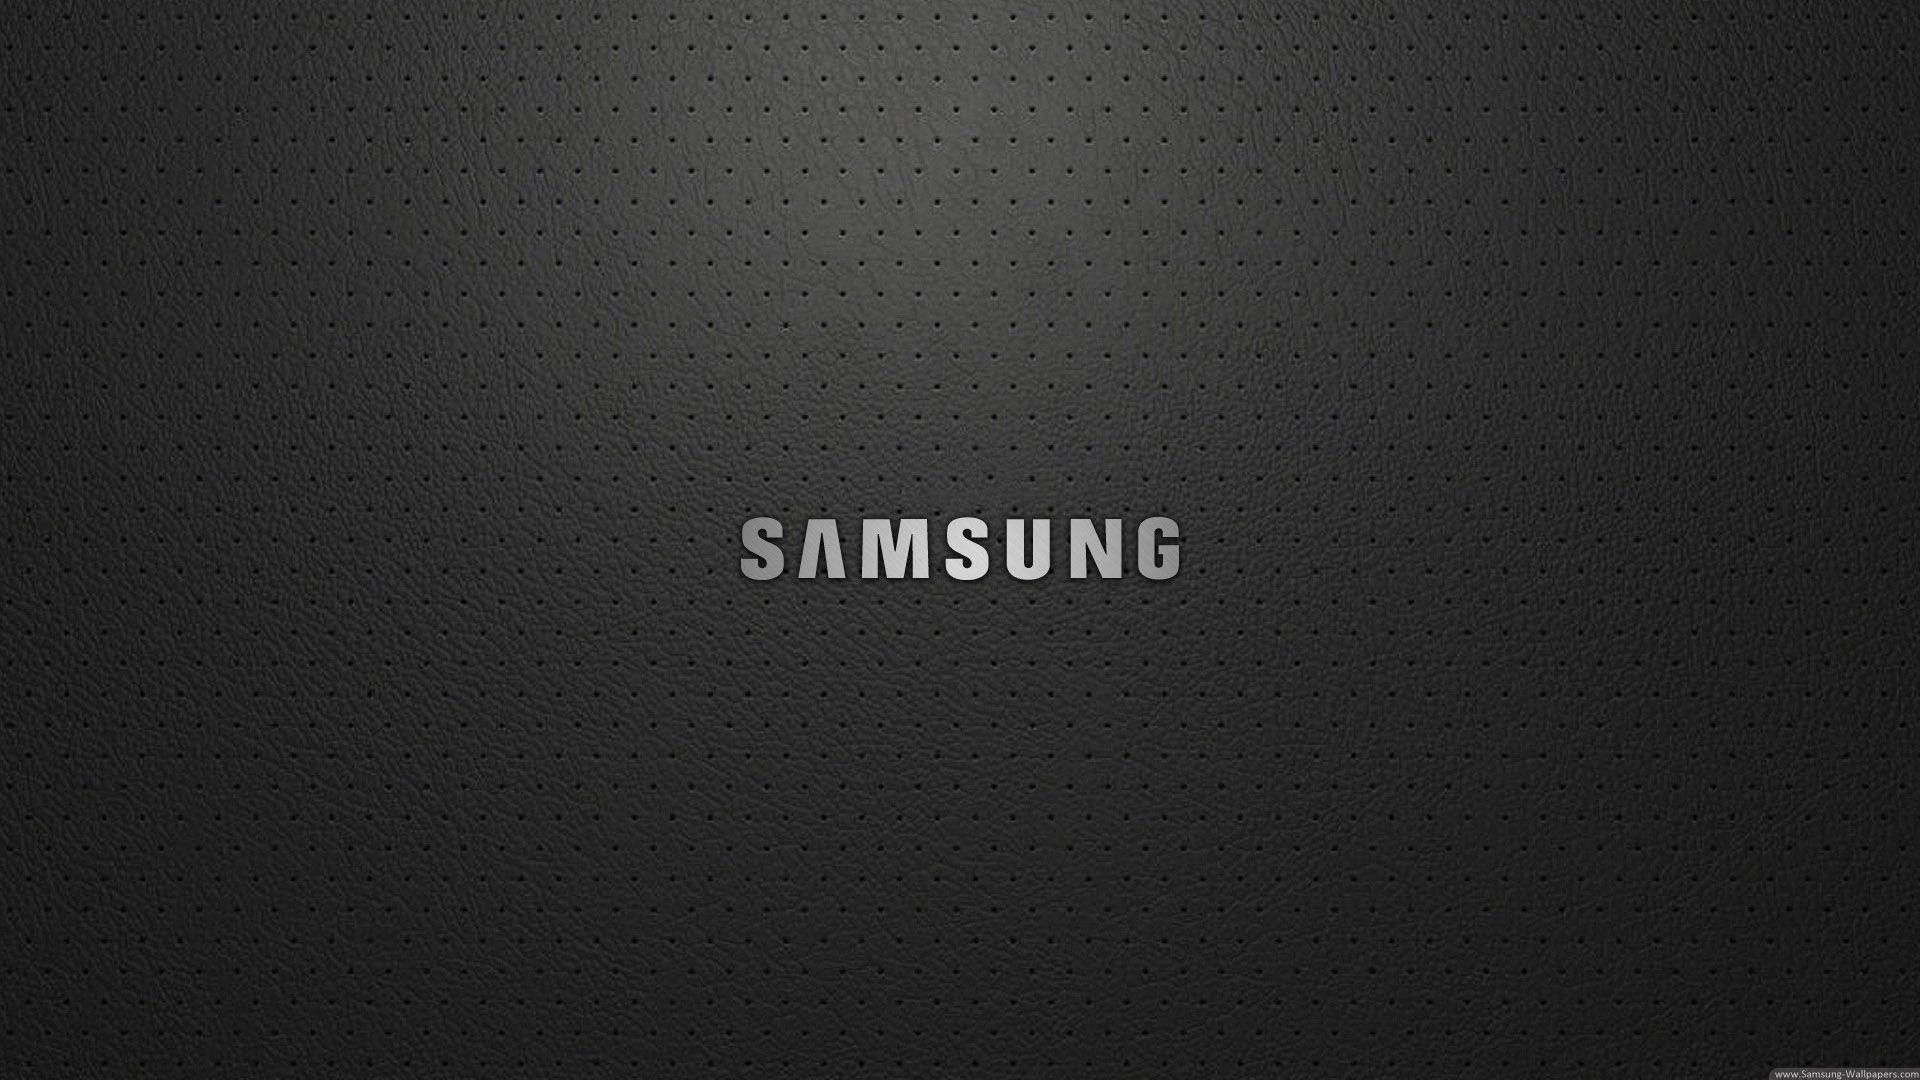 Samsung PC Wallpaper Free Samsung PC Background